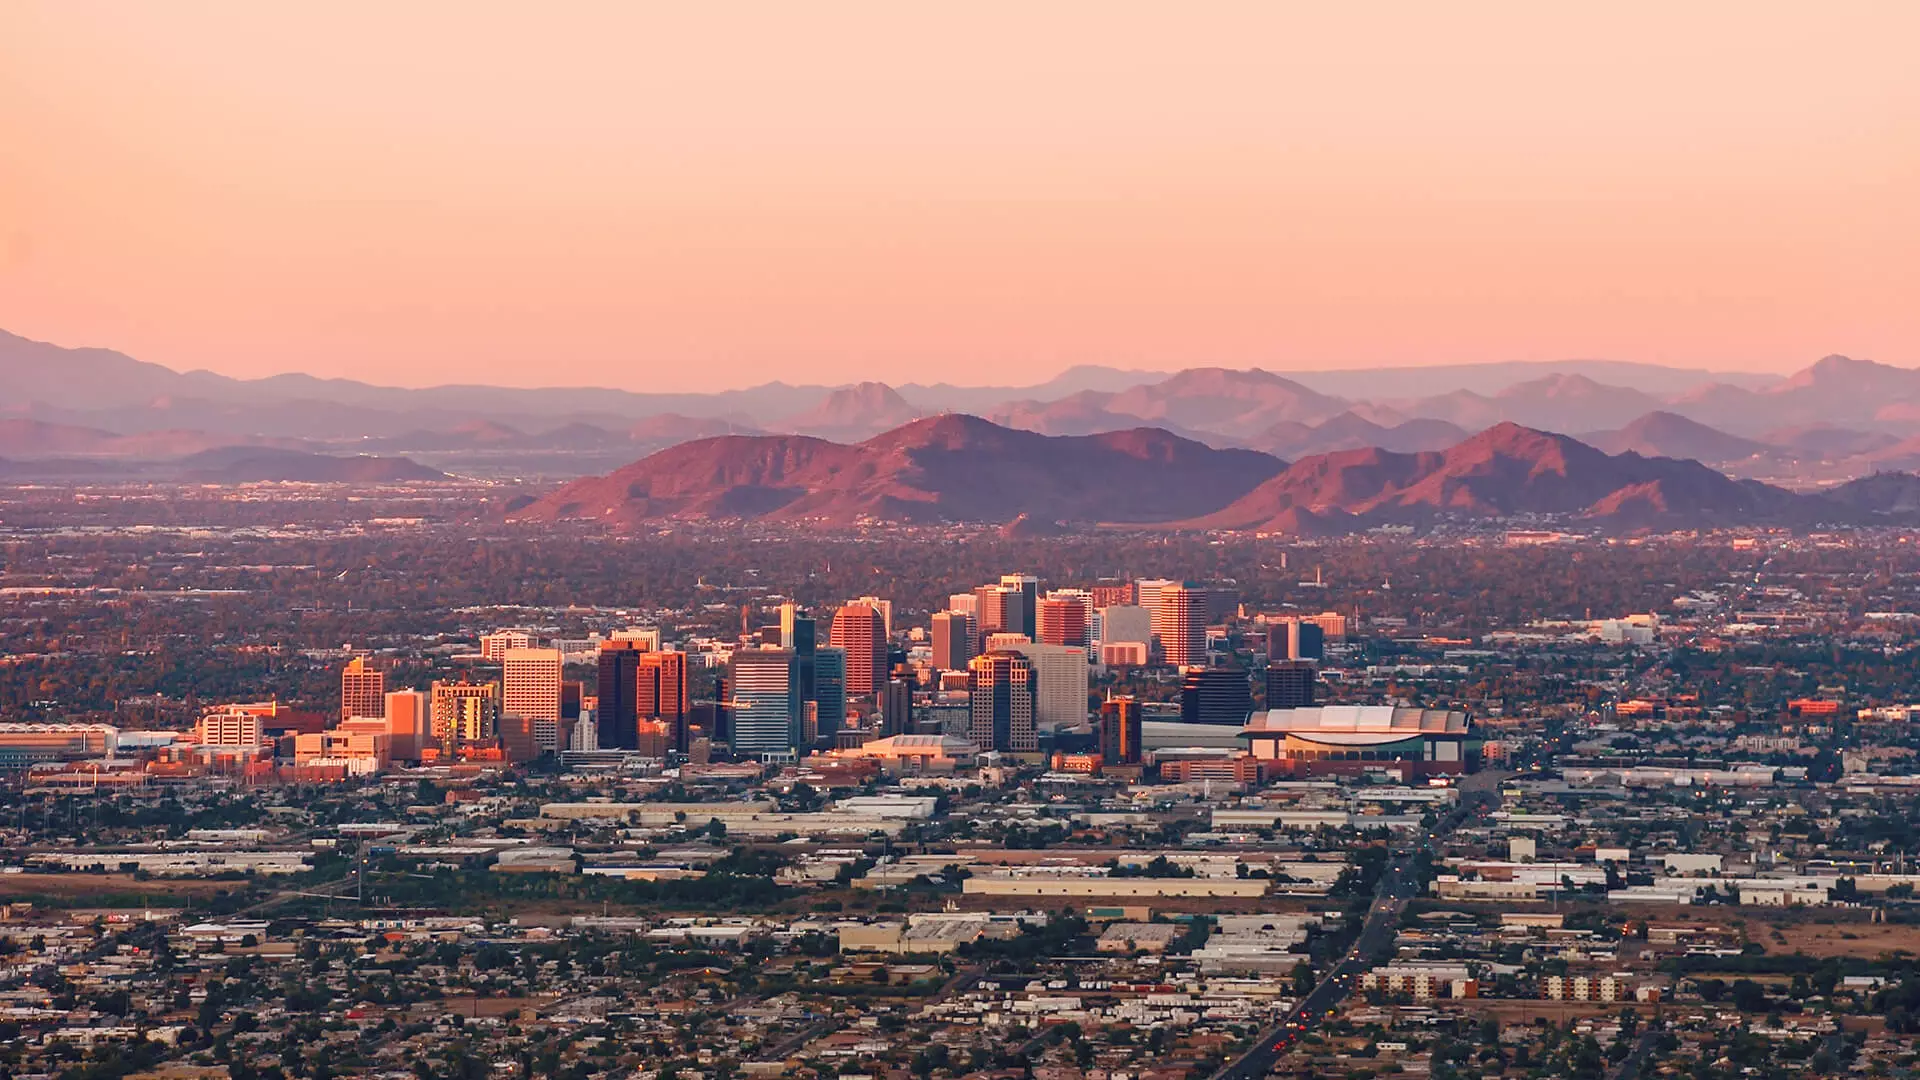 An image of Arizona's city skyline